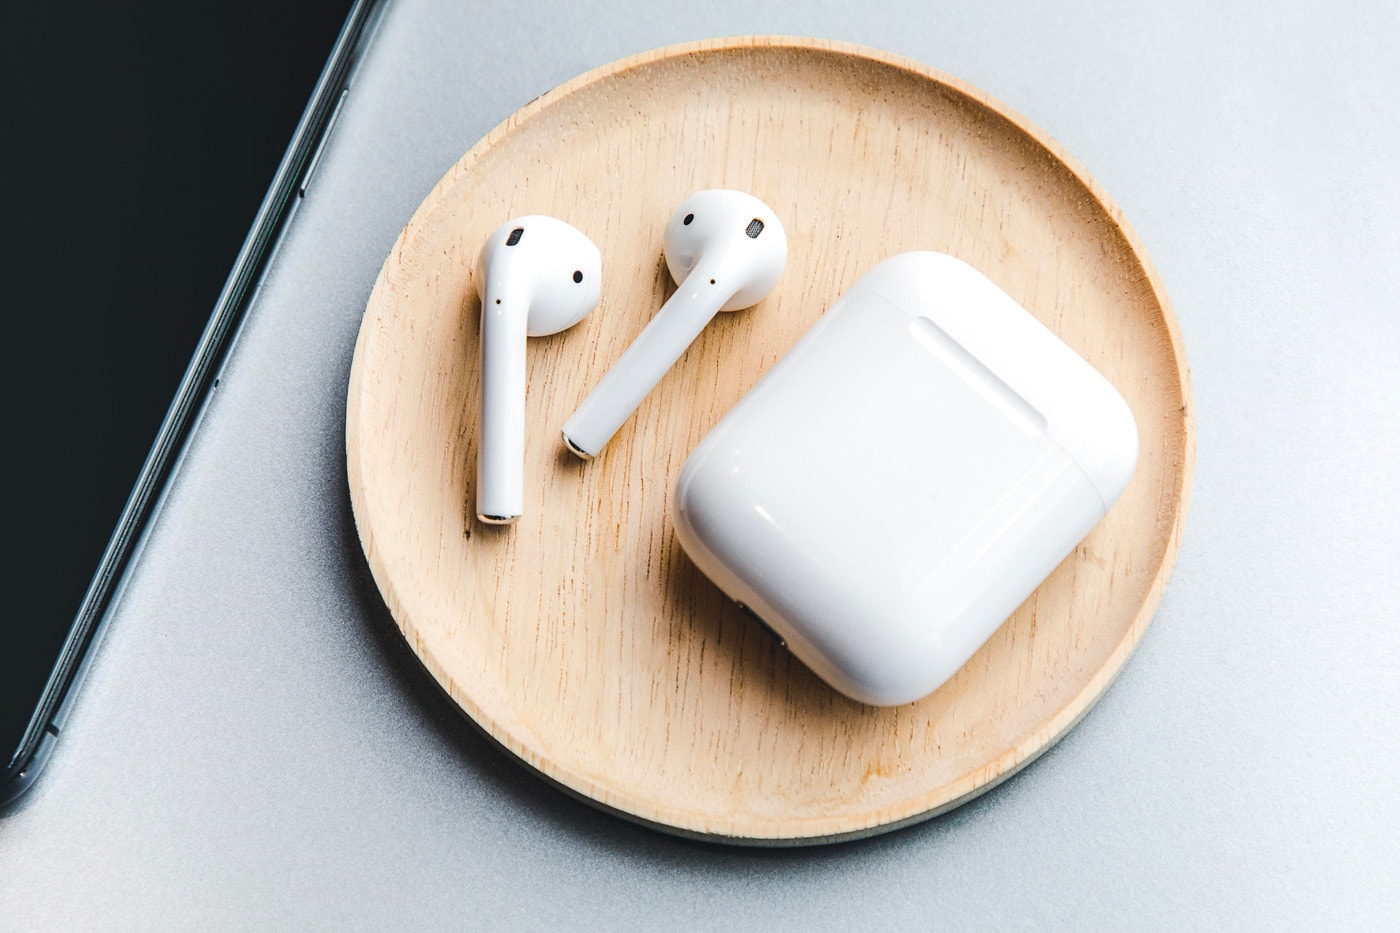 Apple AirPod Charging Case Rumors power qi coils wireless power leaks